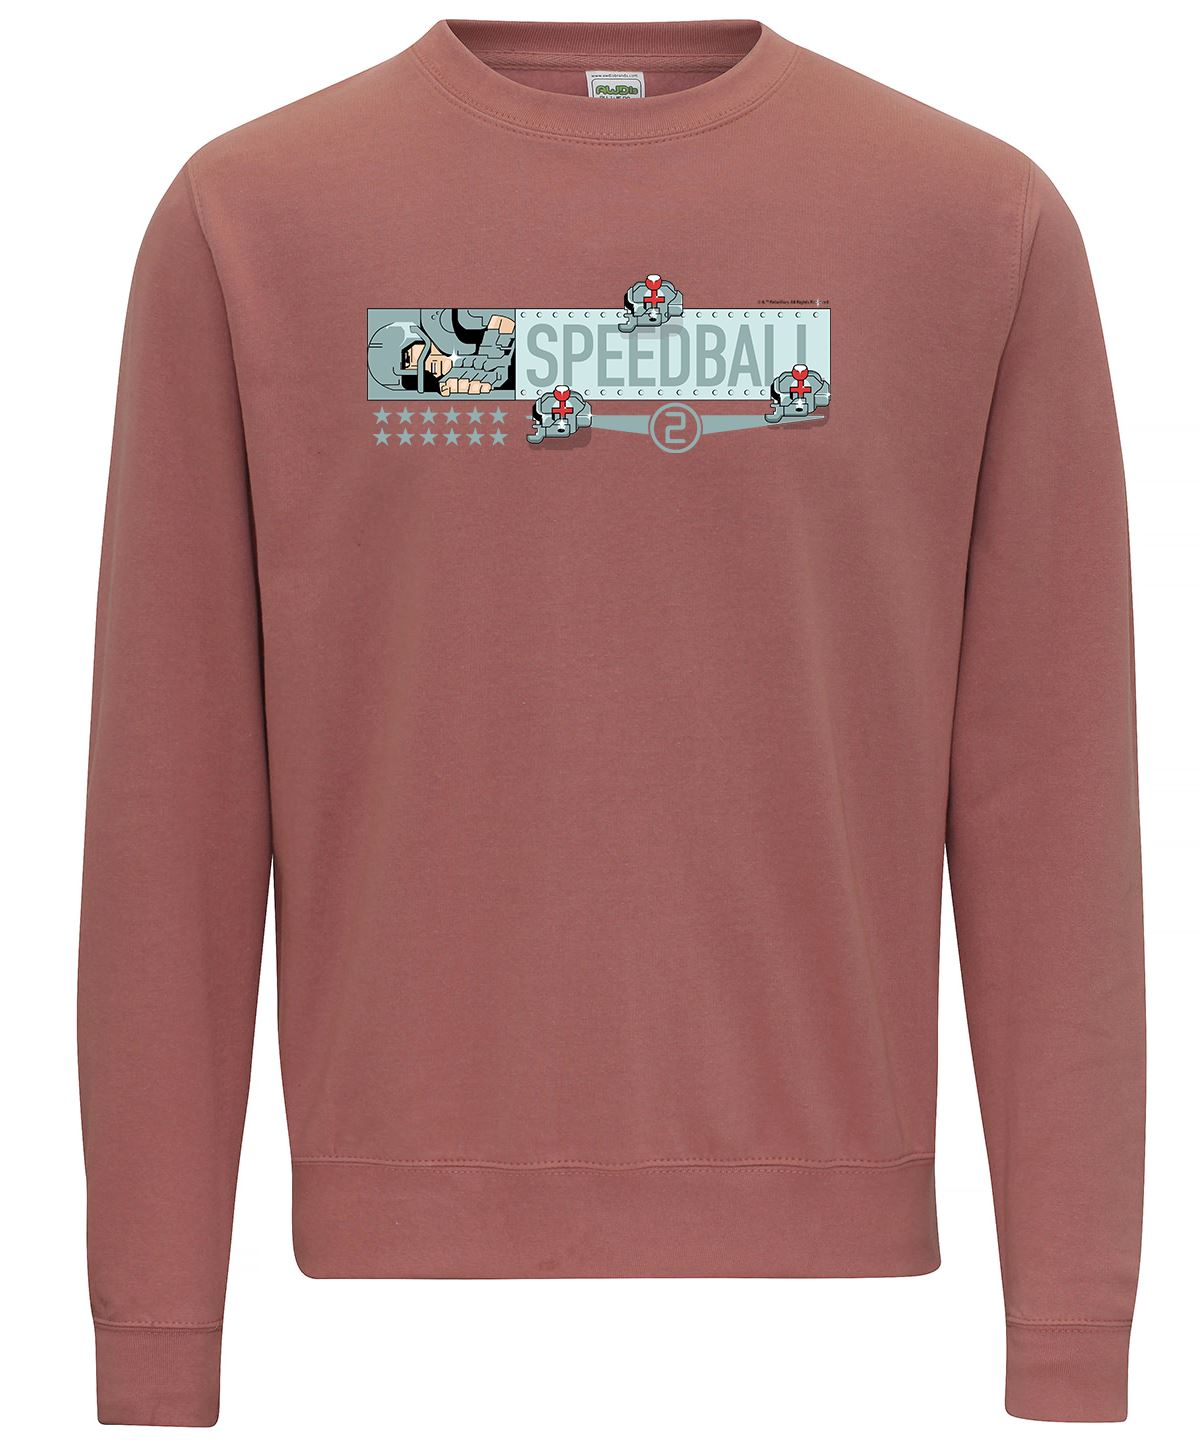 Speedball 2 Ice Cream Ice Cream Retro Gaming Sweatshirt Sweatshirt Seven Squared Small Dusty Pink 